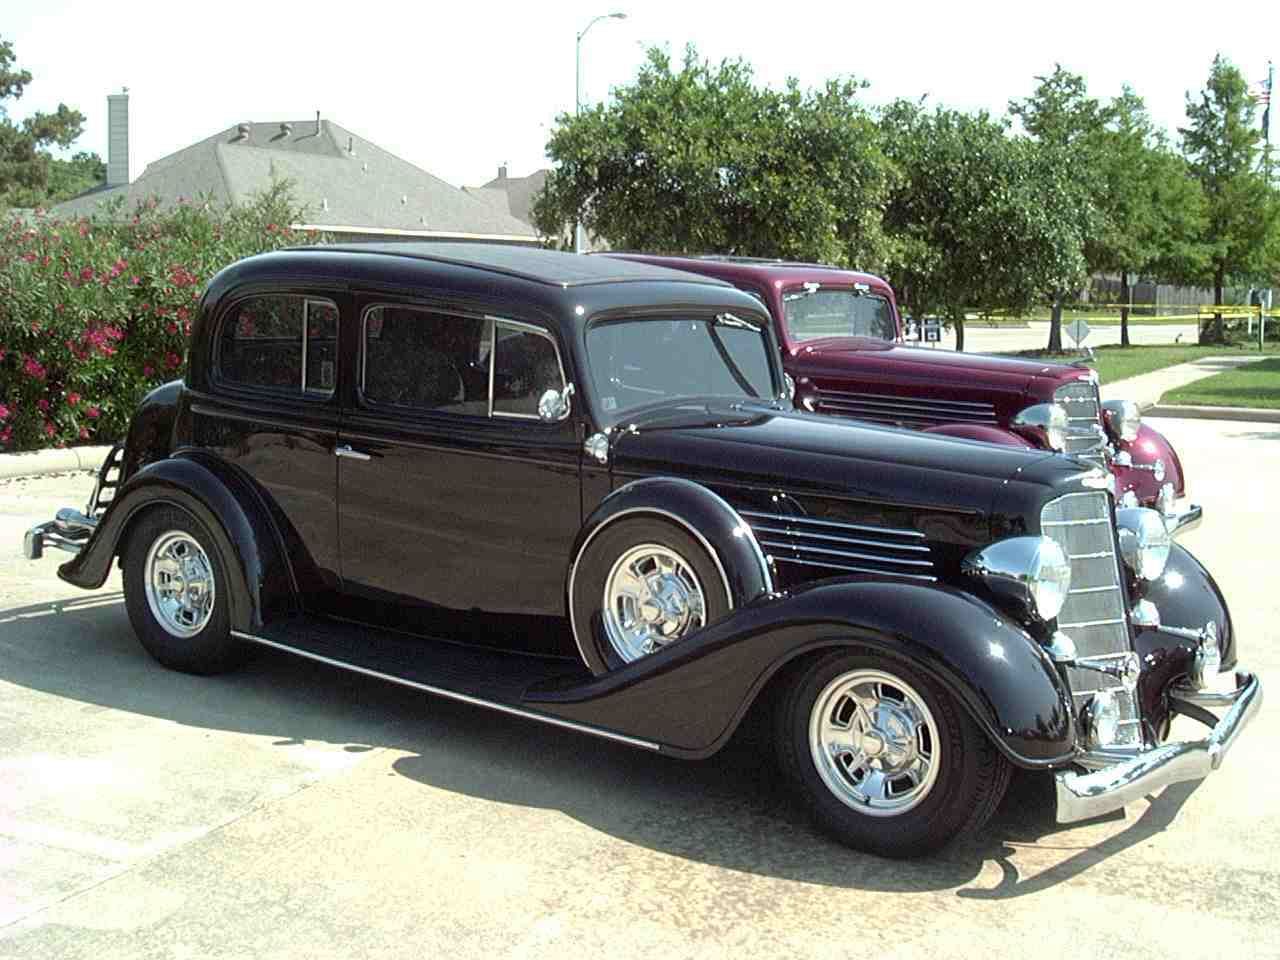 1934 buick model 58 victoria street rod 350tpi700r4lite project 1